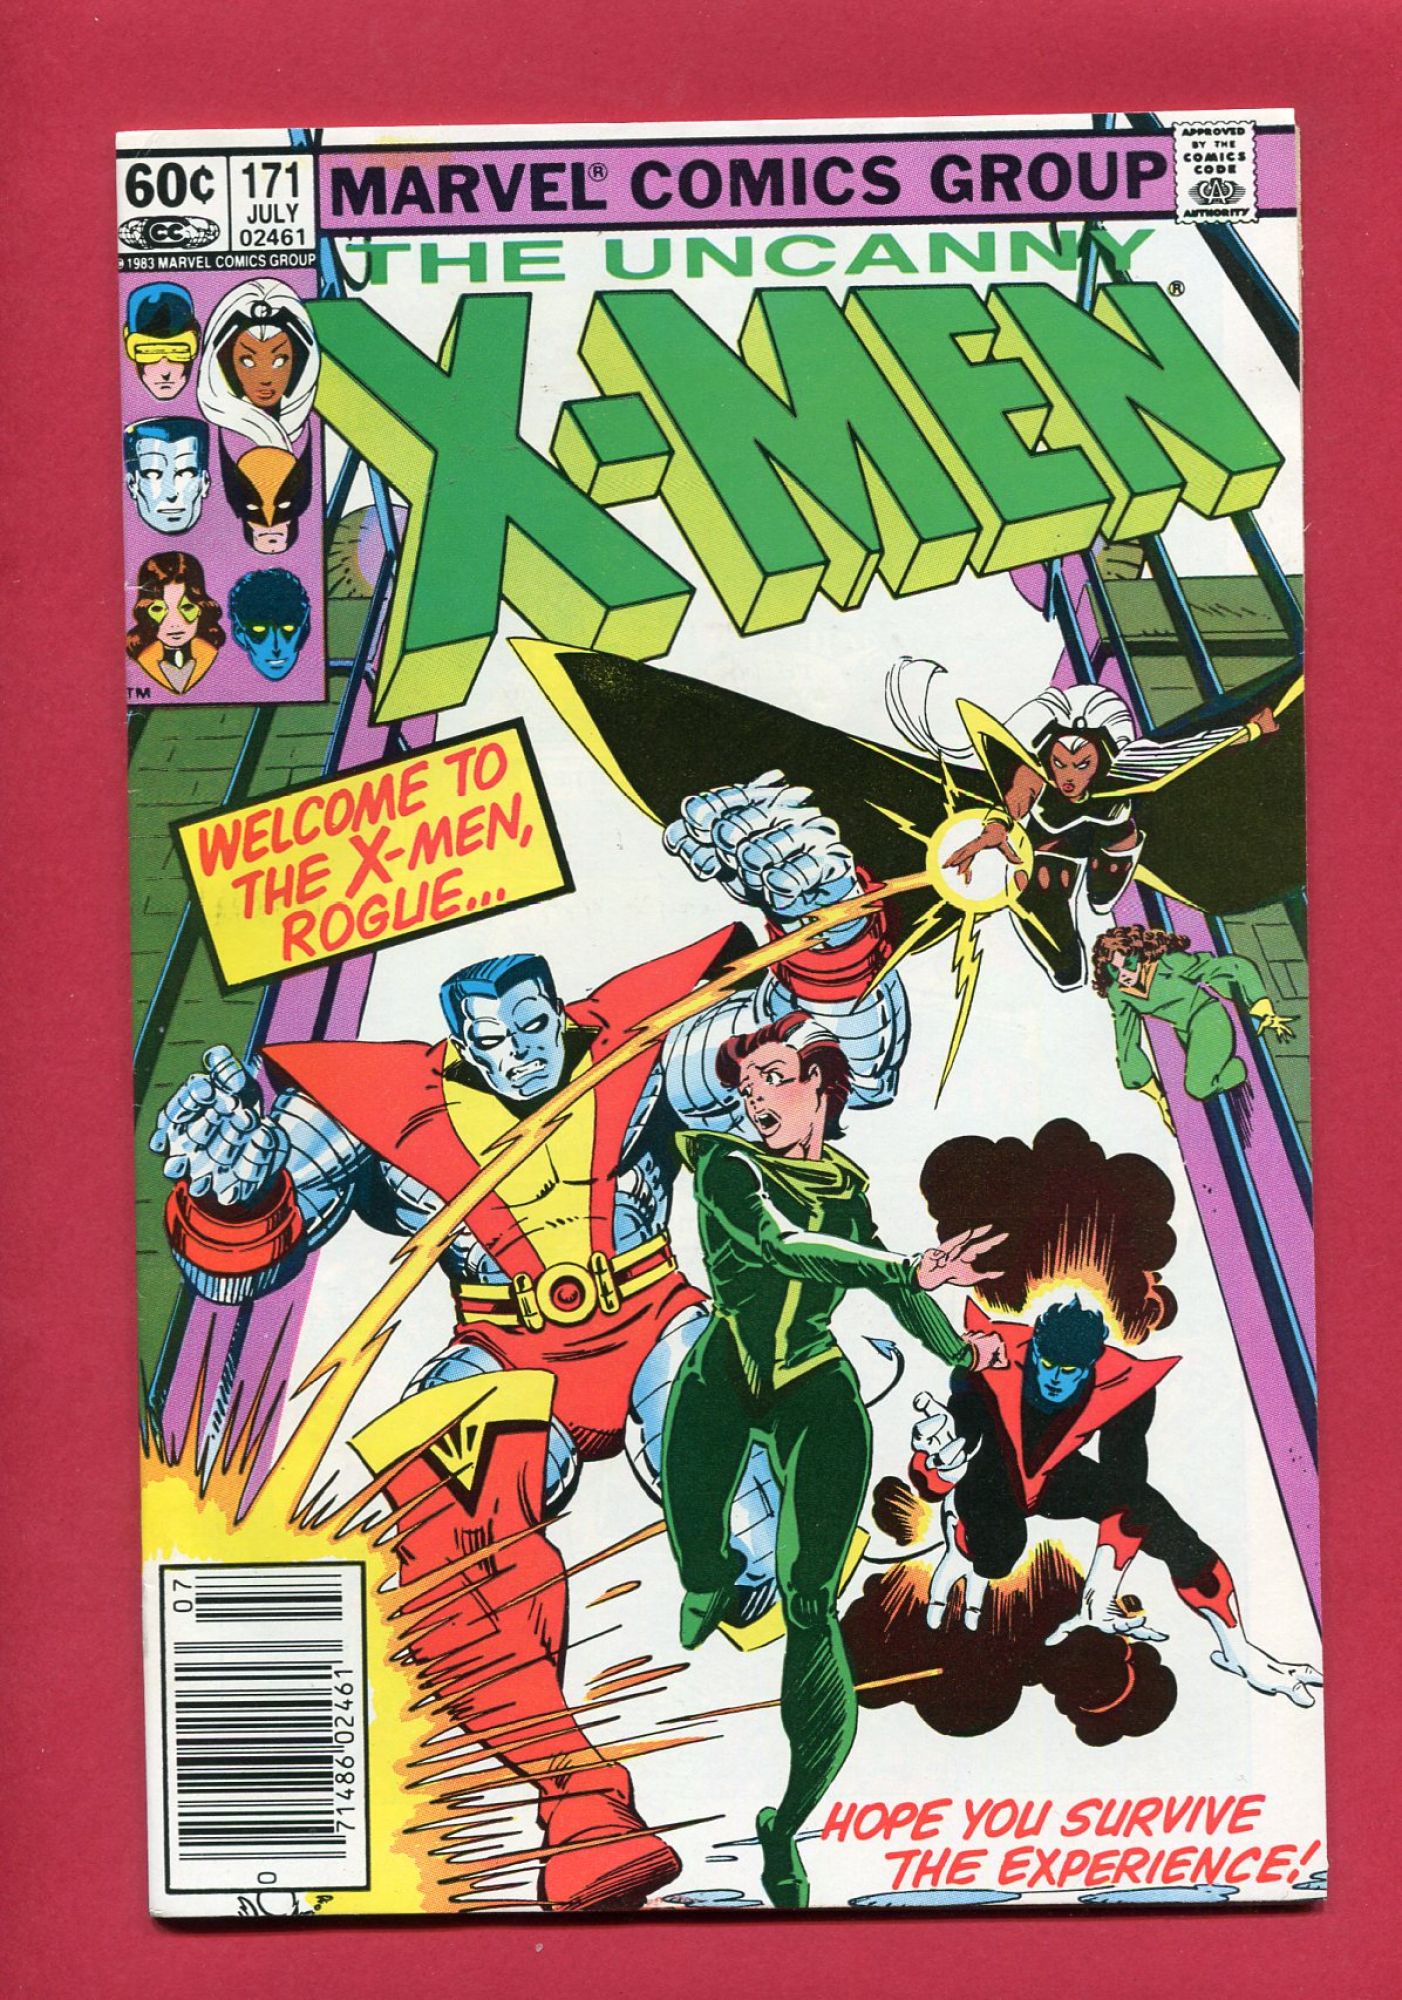 Uncanny X-Men #171, Jul 1983, 8.5 VF+